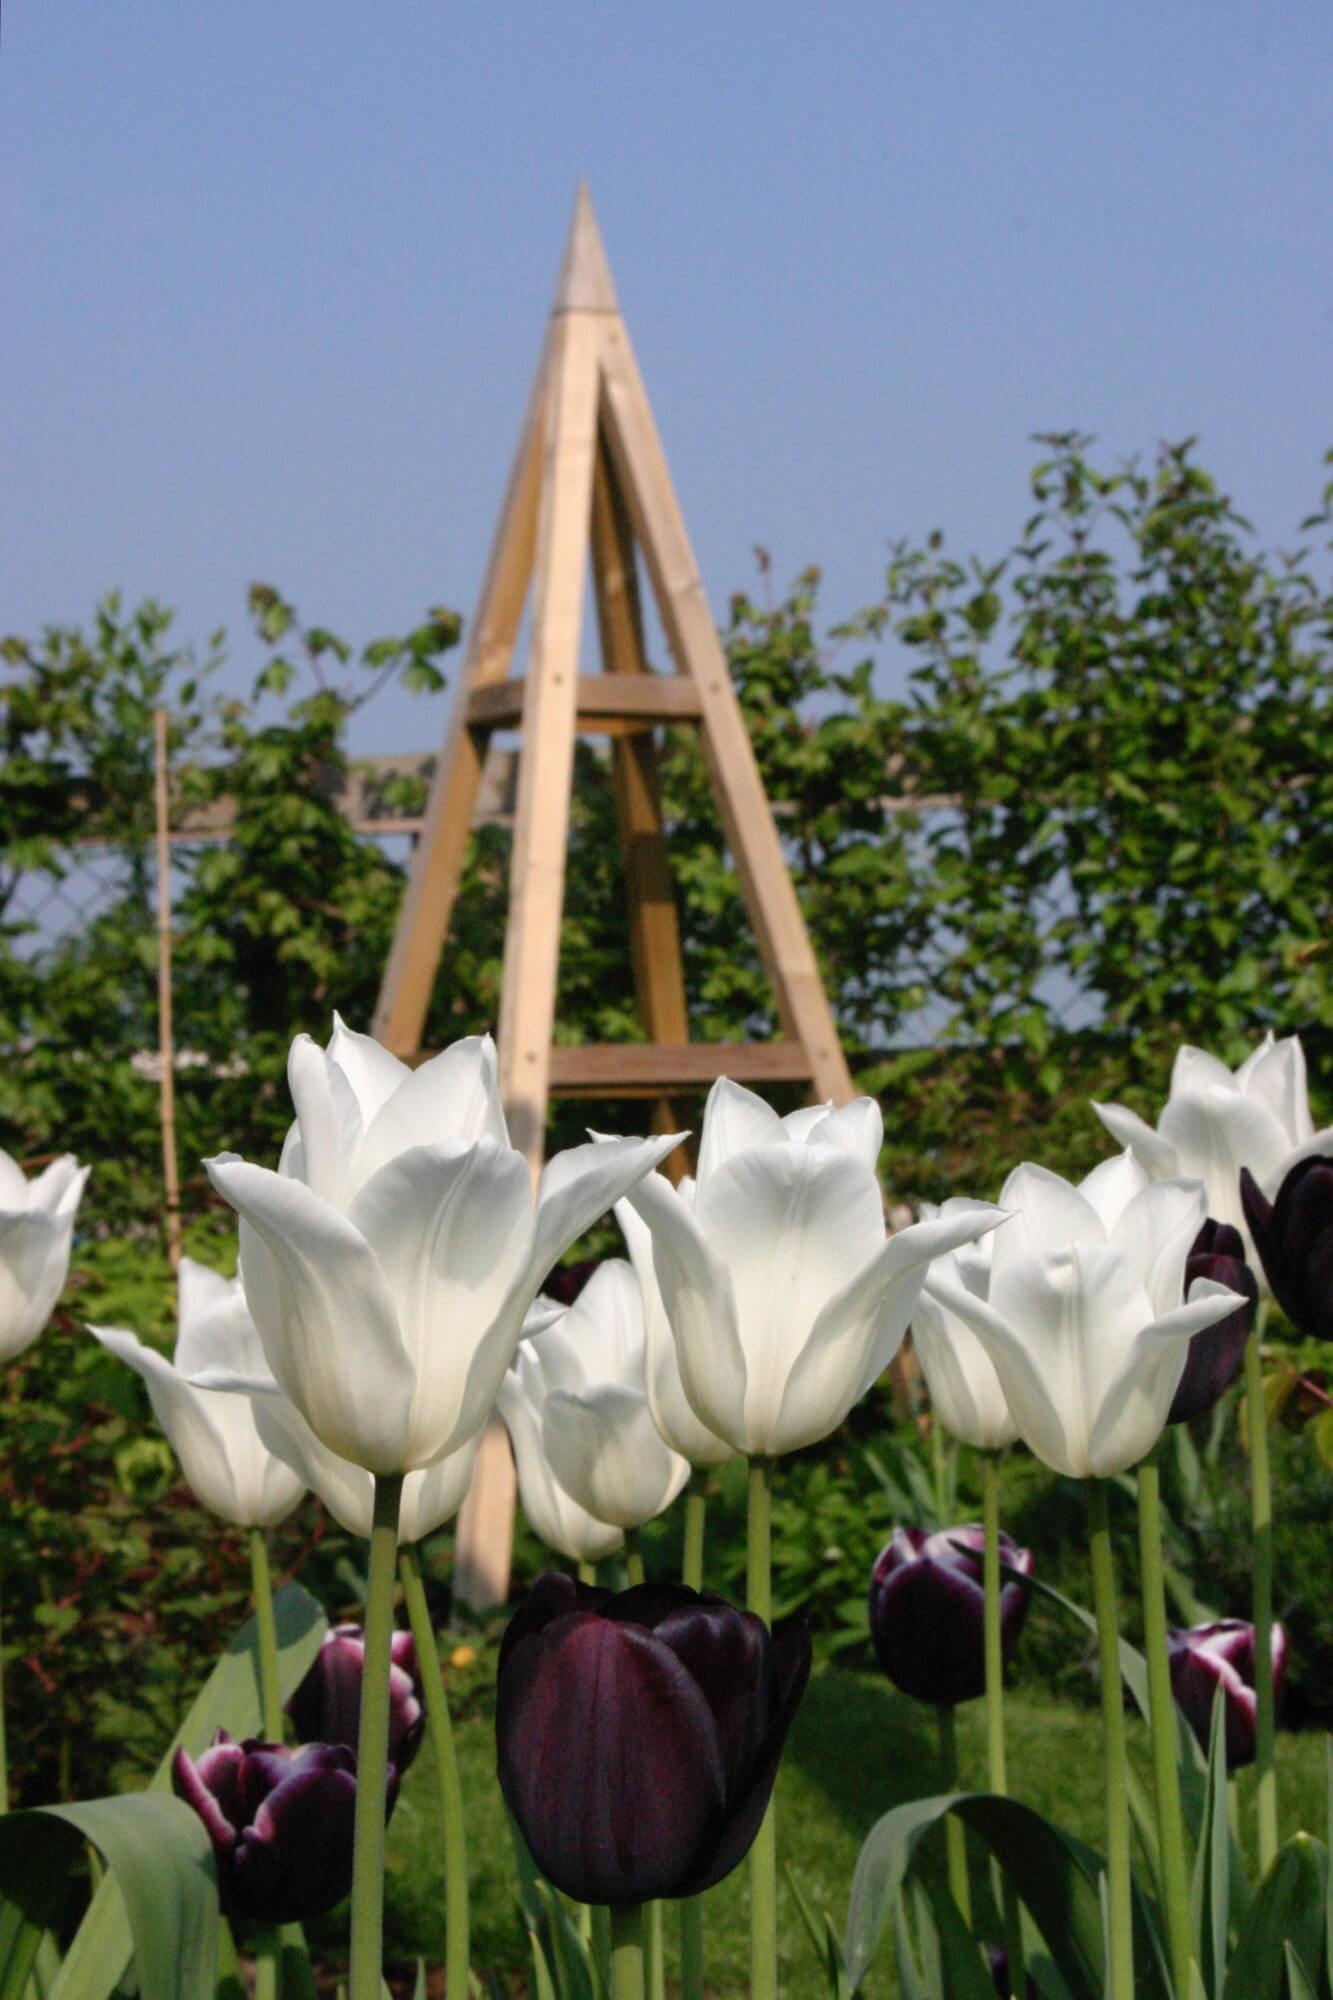 rose obelisk with tulips in a garden designers garden Oxford against blue sky